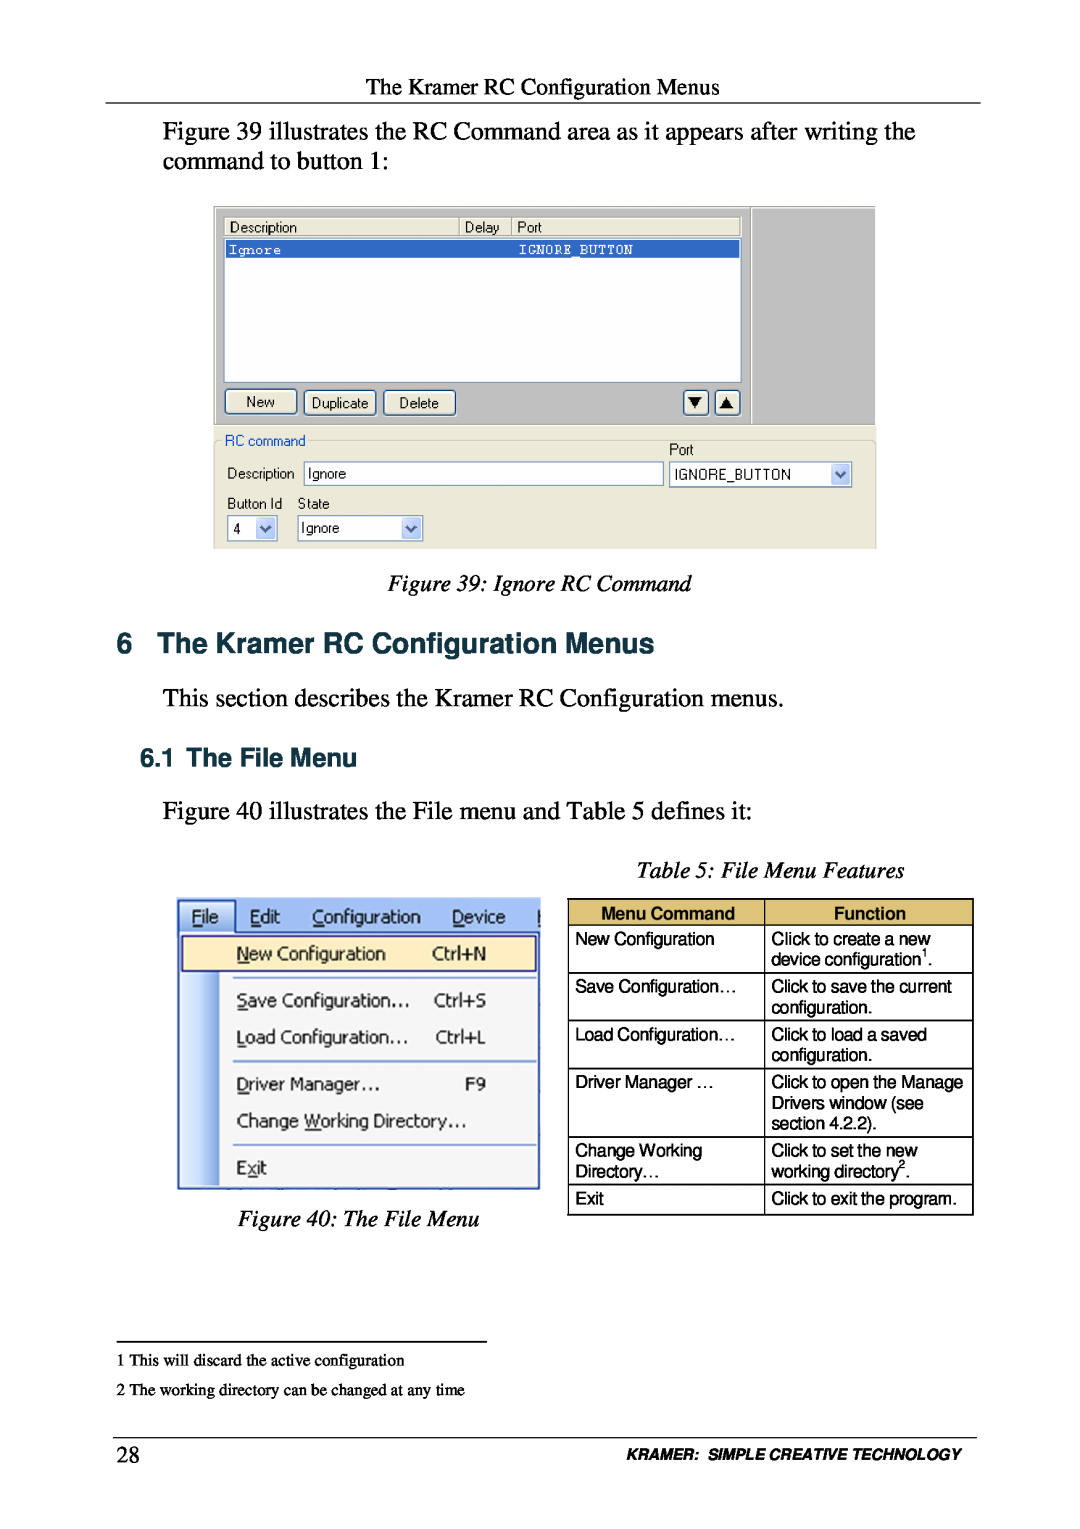 Kramer Electronics RC-SV The Kramer RC Configuration Menus, The File Menu, Ignore RC Command, File Menu Features, Function 